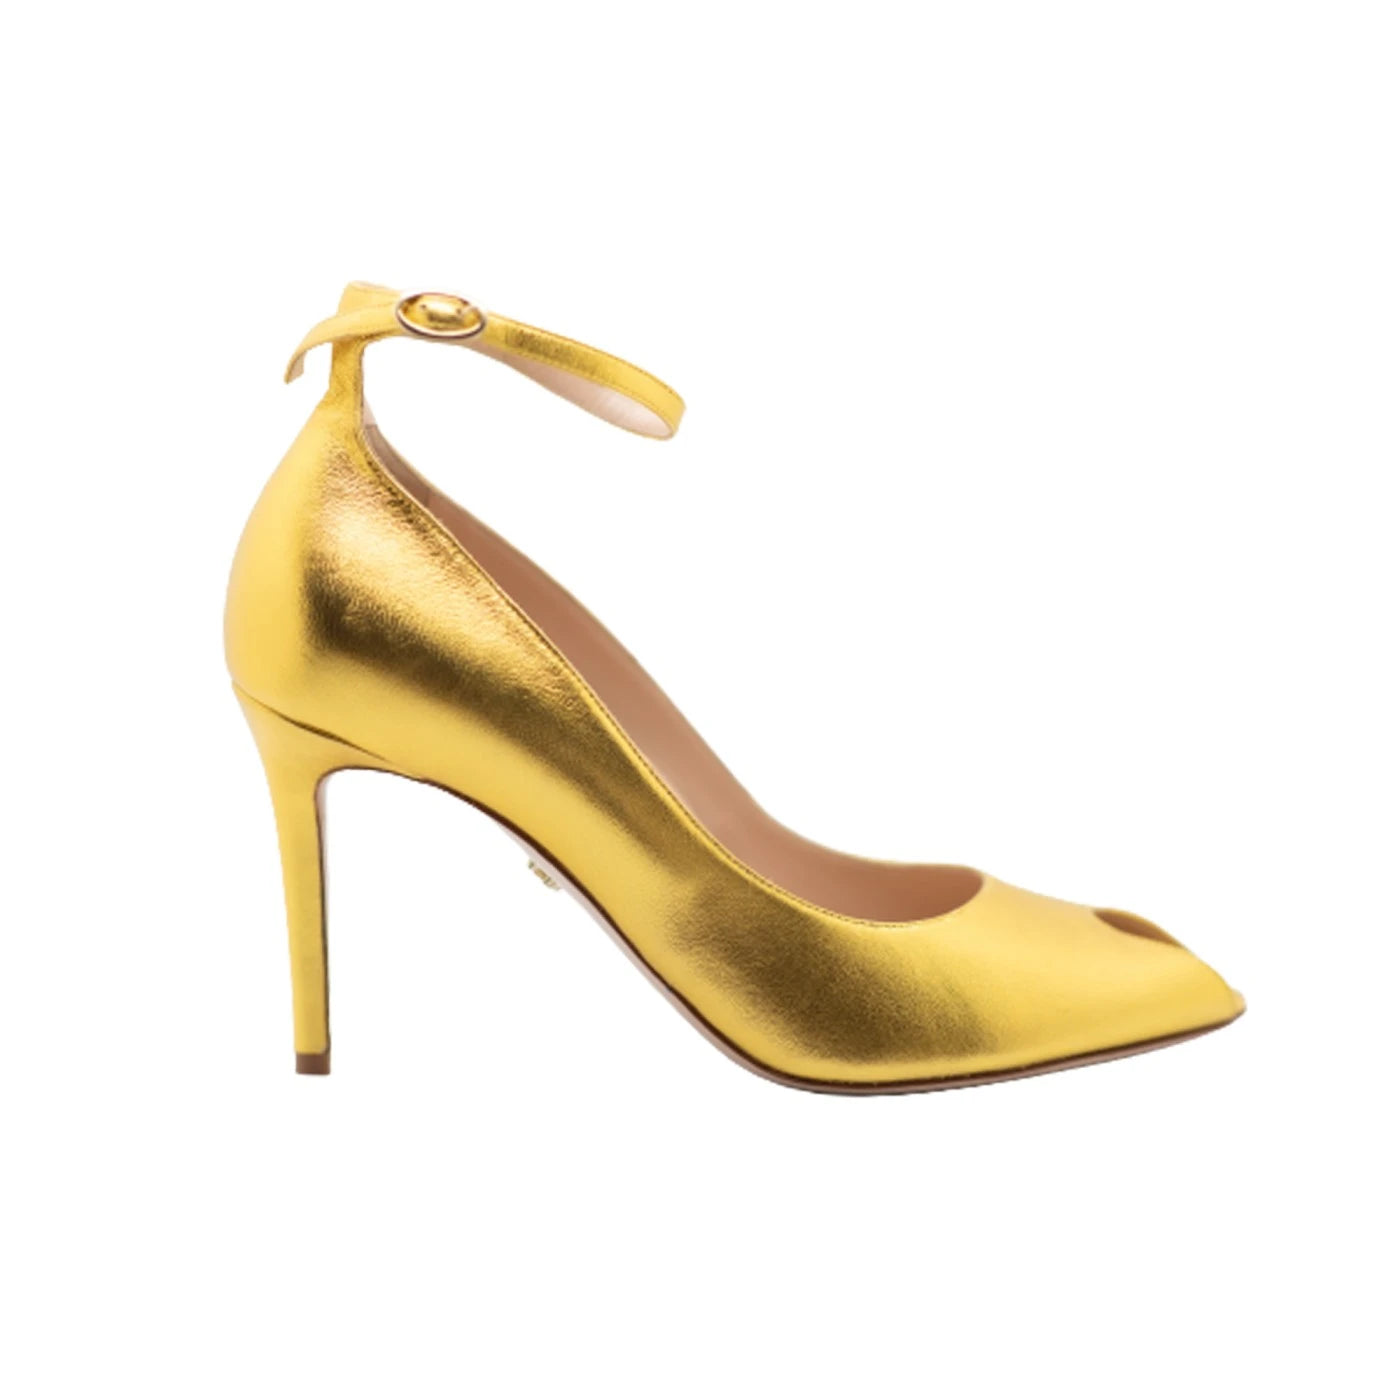 STYLZREPUBLIC Women's Ankle Strap High Heel (Gold) : Amazon.in: Fashion